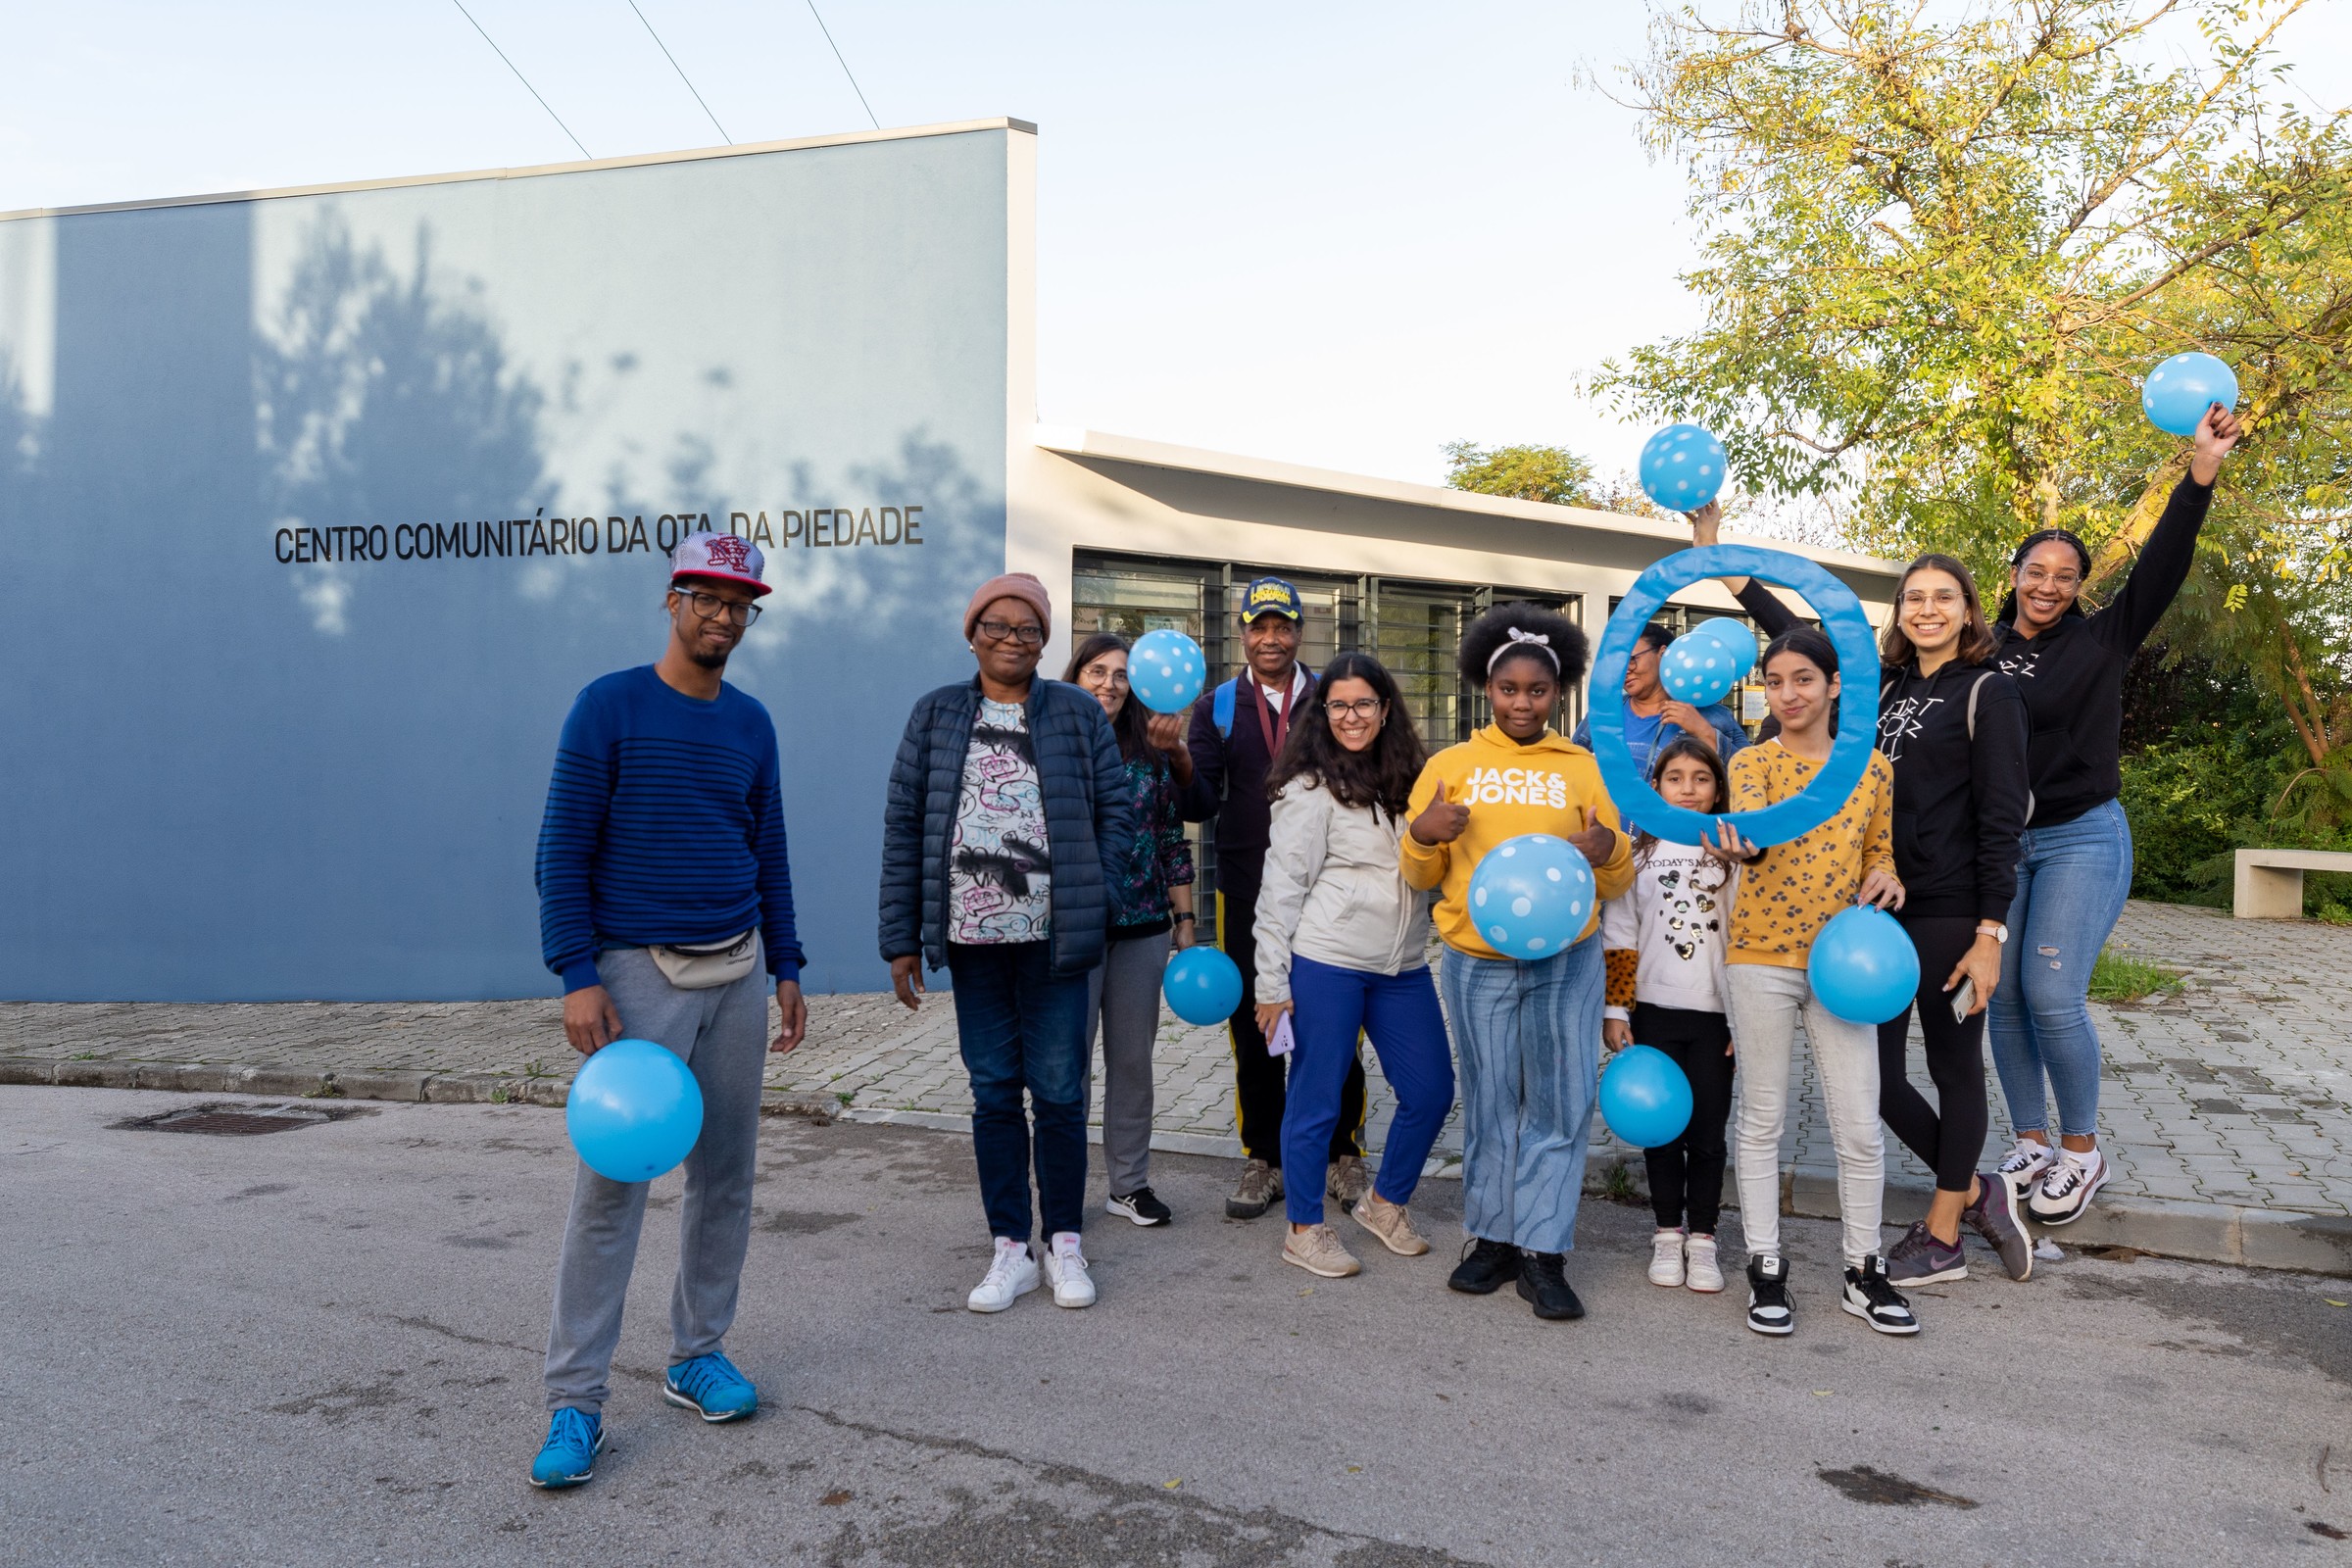 Projeto Municipal “Art For All”: “Bairro Azul - Agir pela Diabetes”